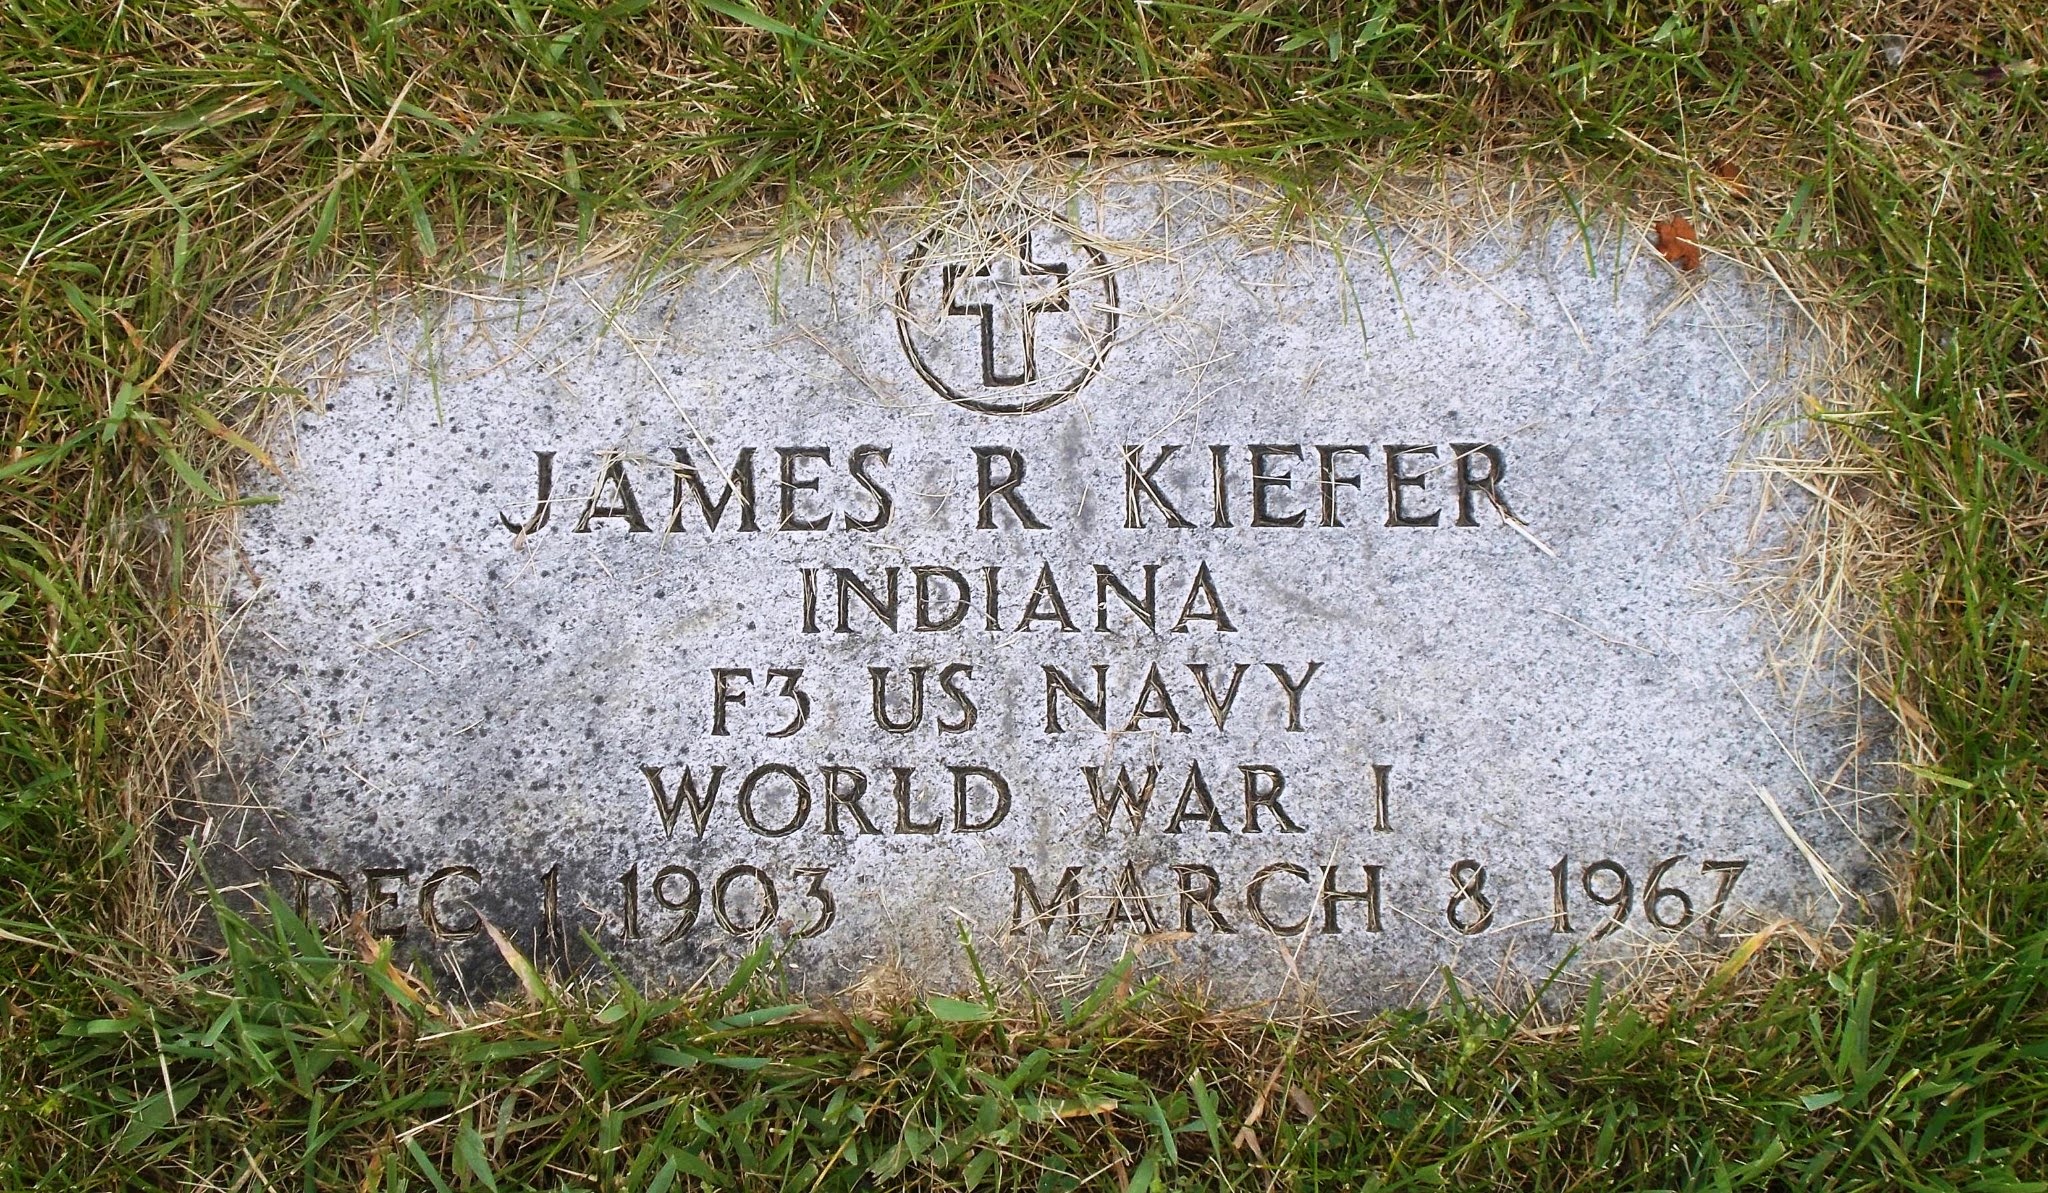 James R Kiefer